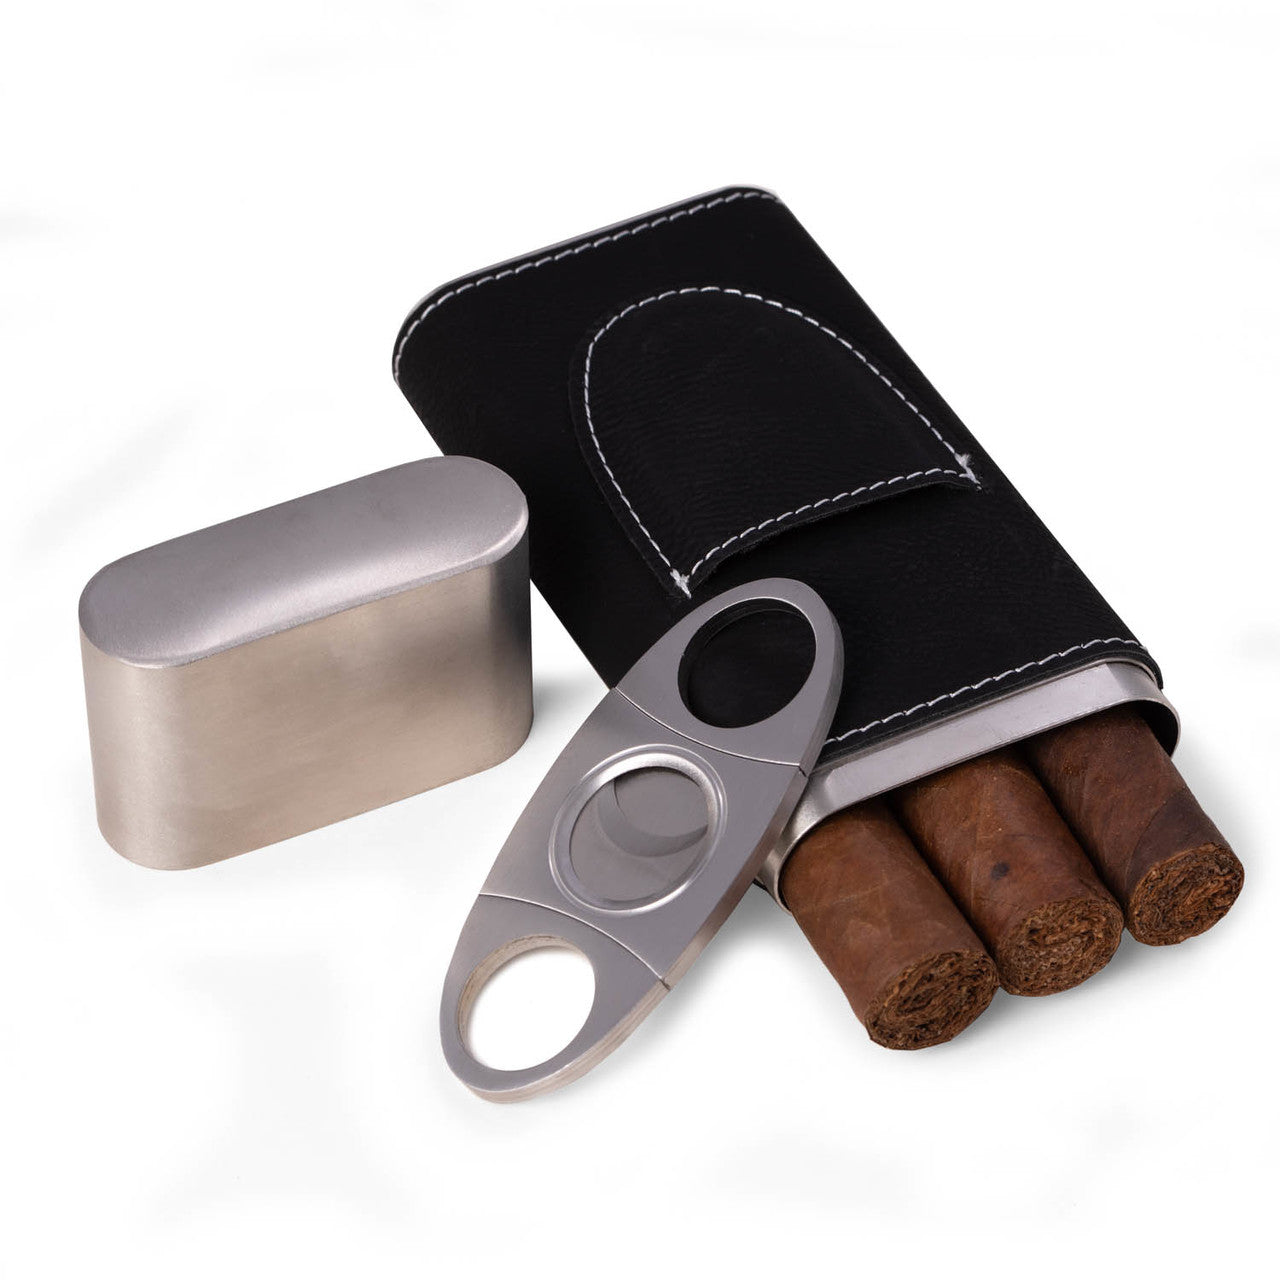 Bey Berk Leather 3 Cigar Case With Cigar Cutter